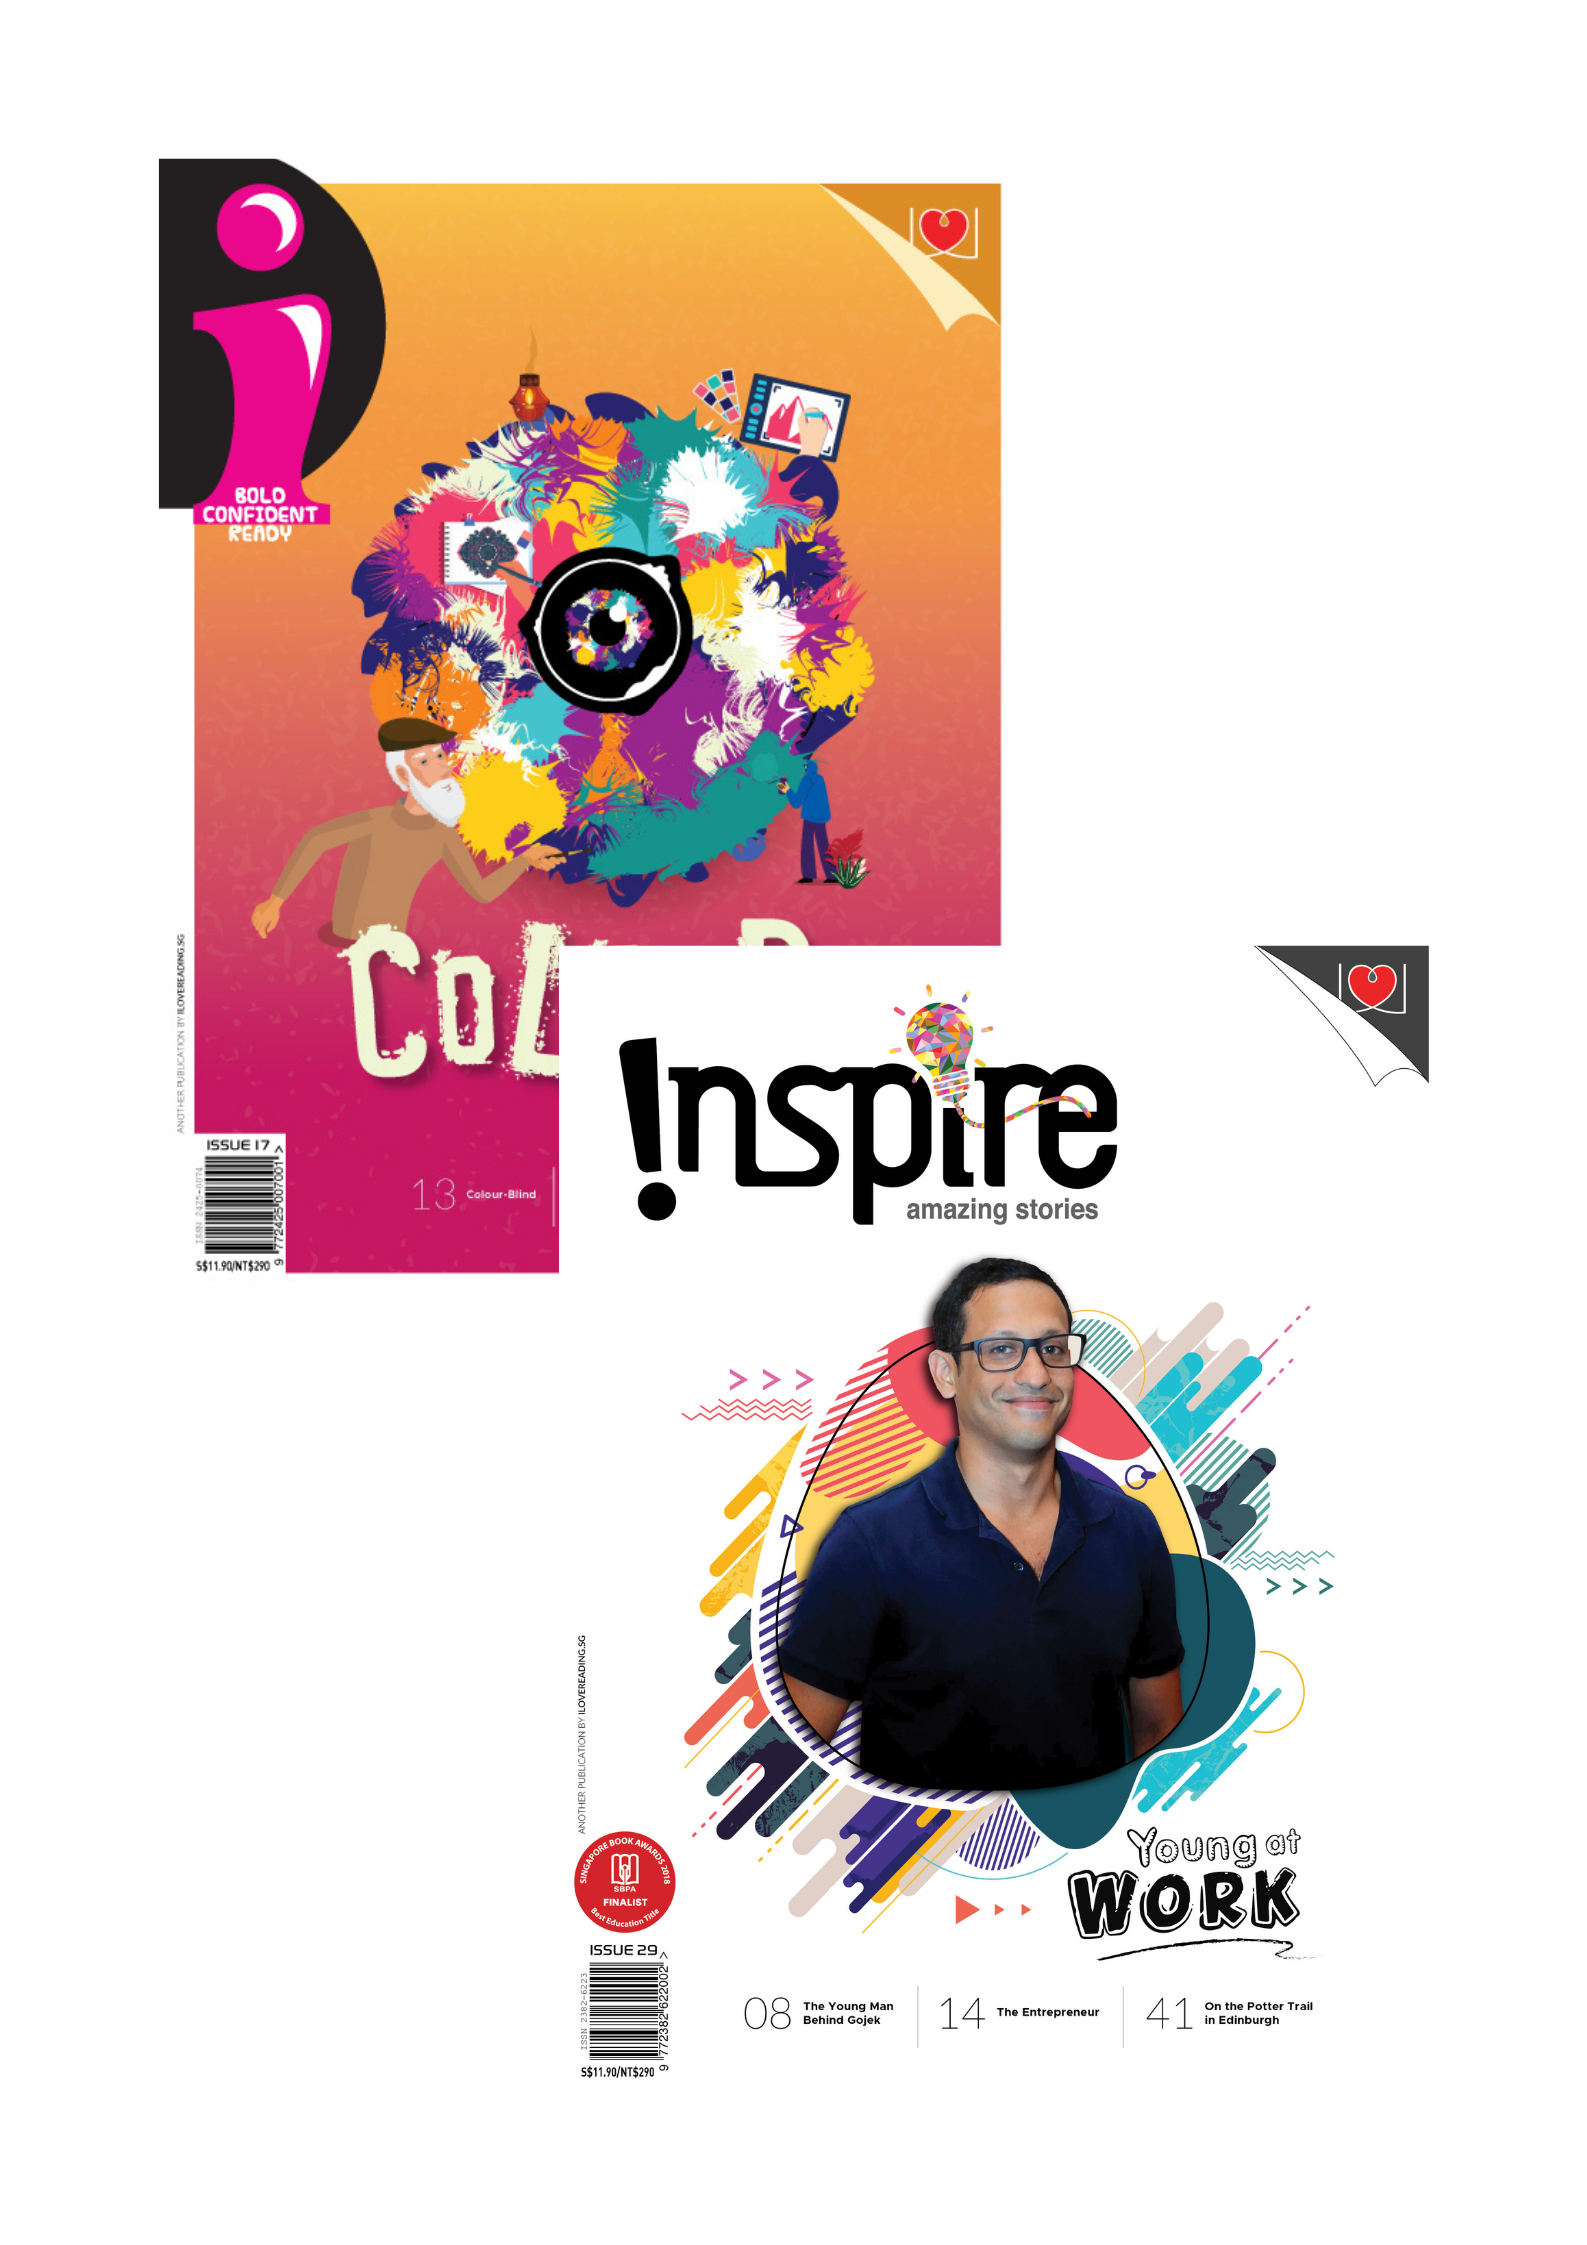 [Combo 2021]: i Magazine (10+ y/o) and Inspire Magazine (12+ y/o): 7 s